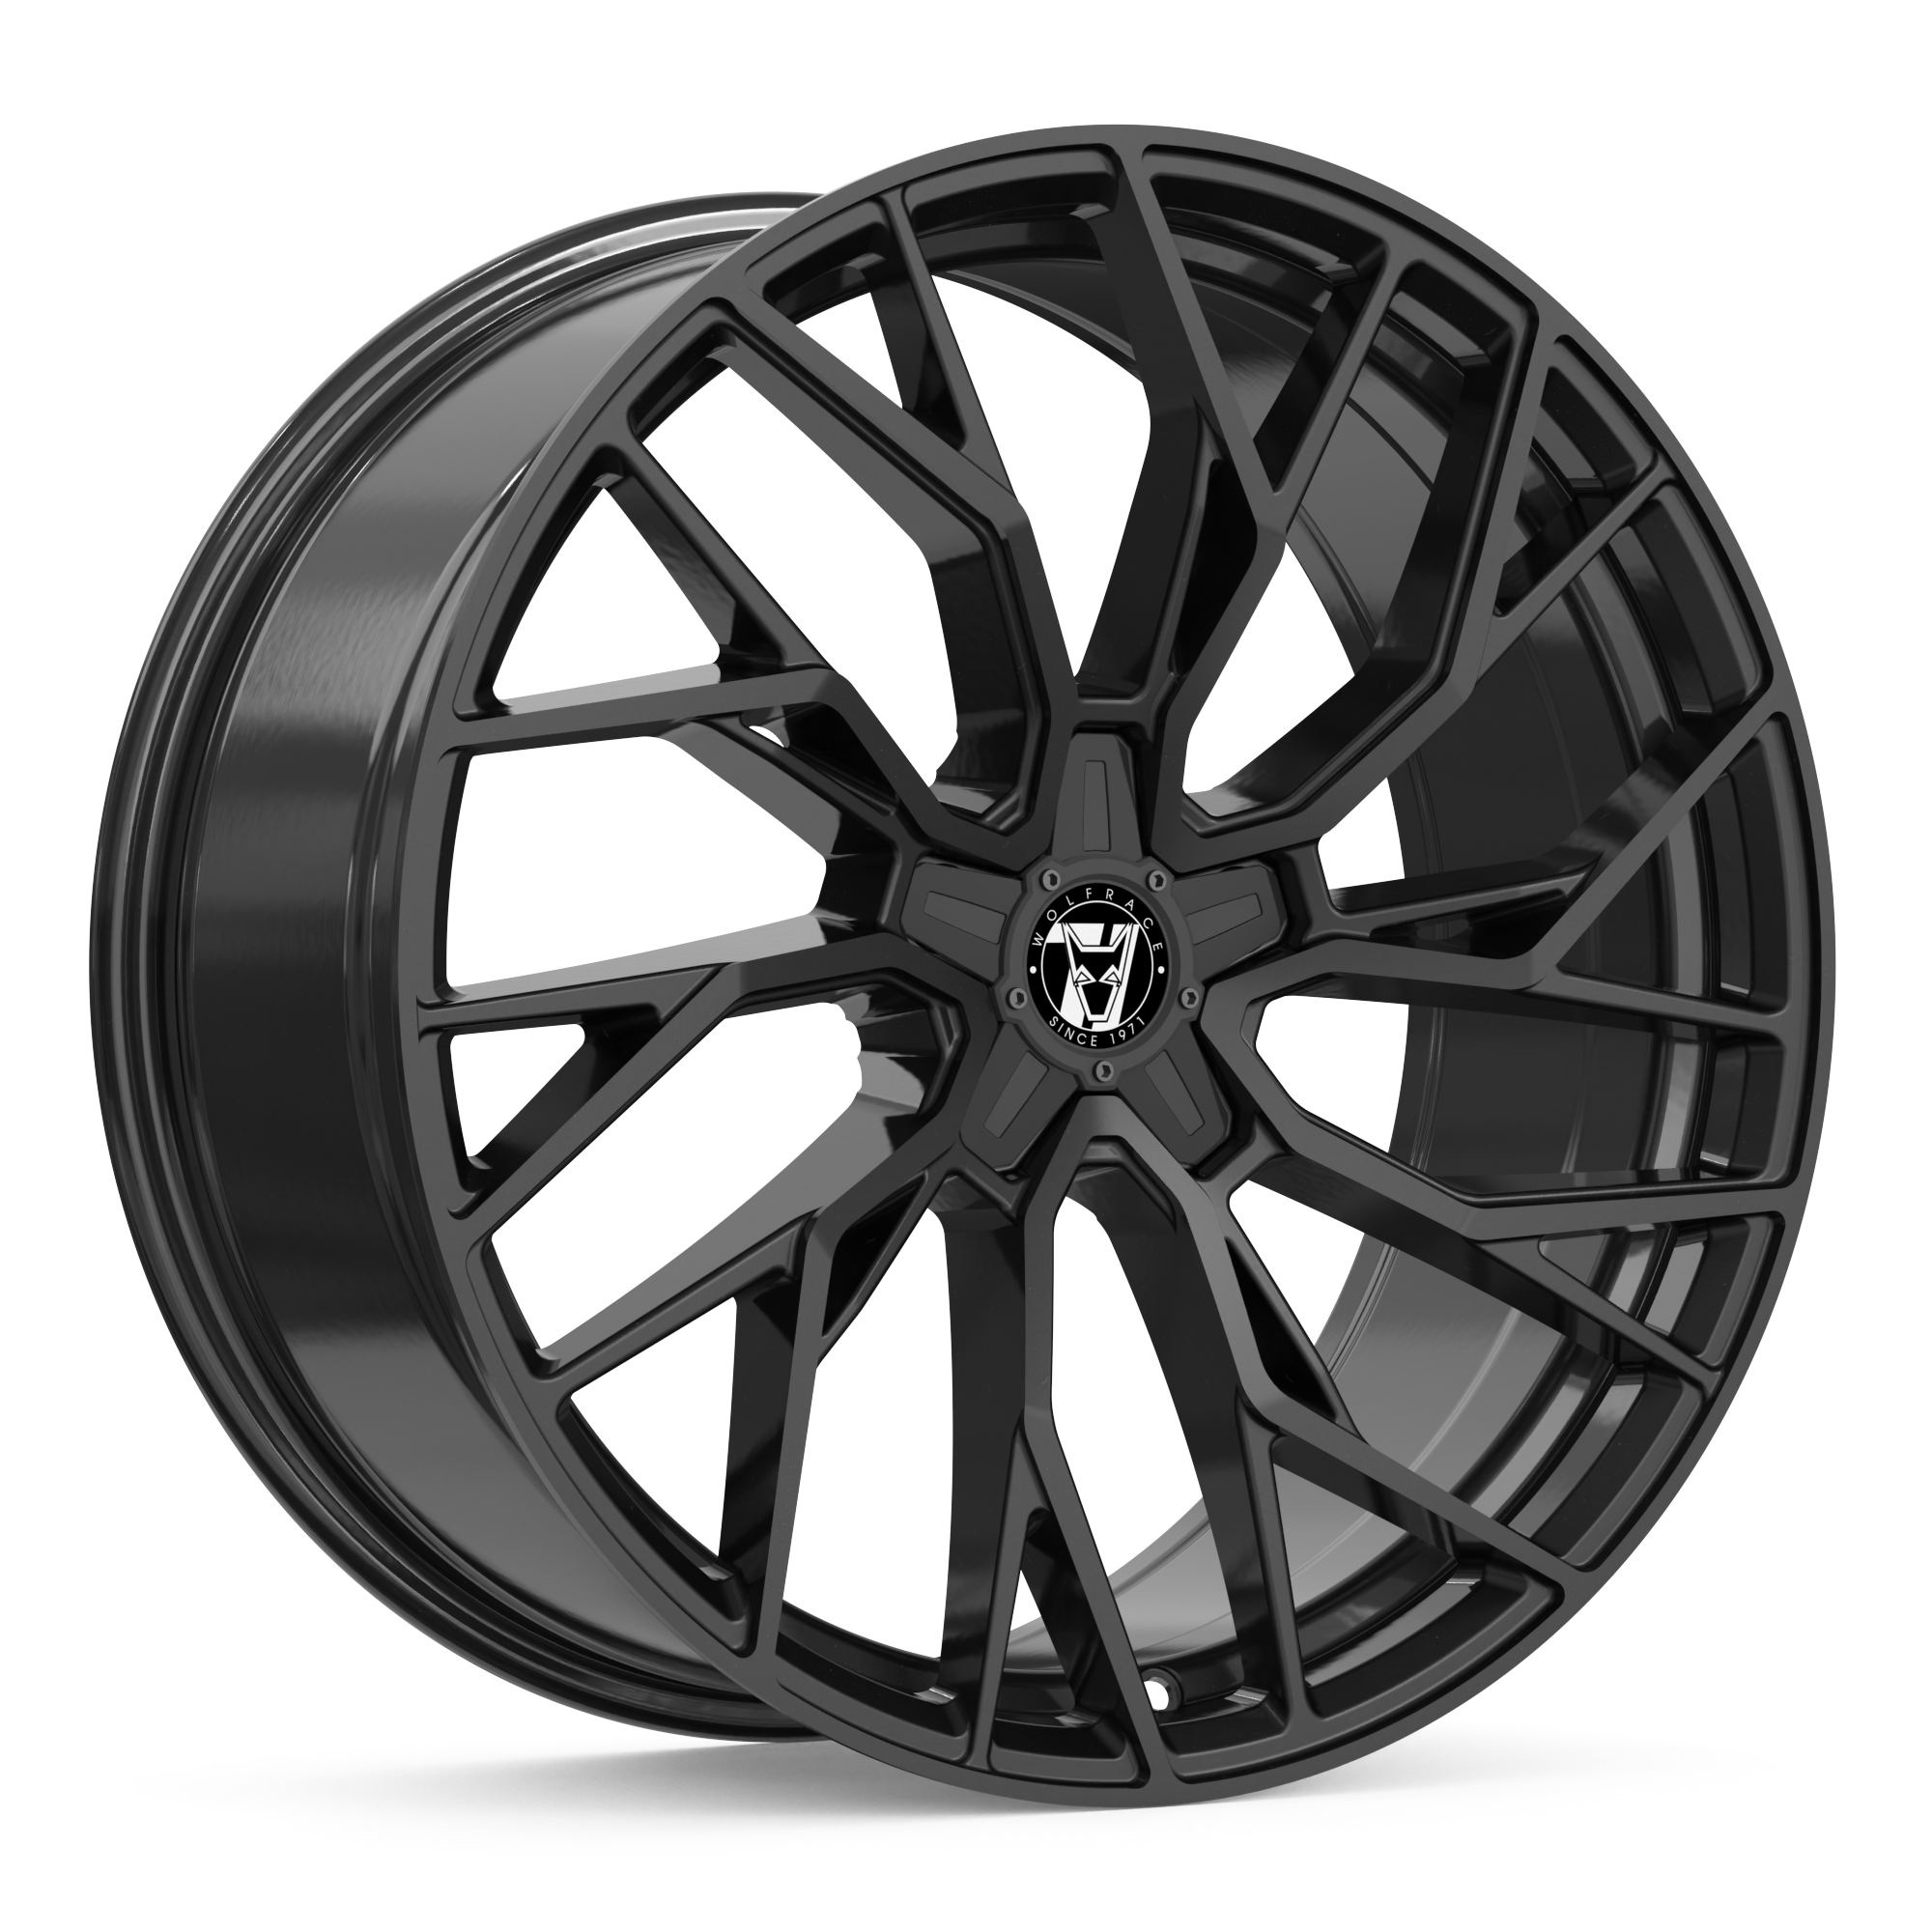 Jantes alu Demon Wheels 71 Voodoo Black Edition [9.5x22] -5x130- ET 38